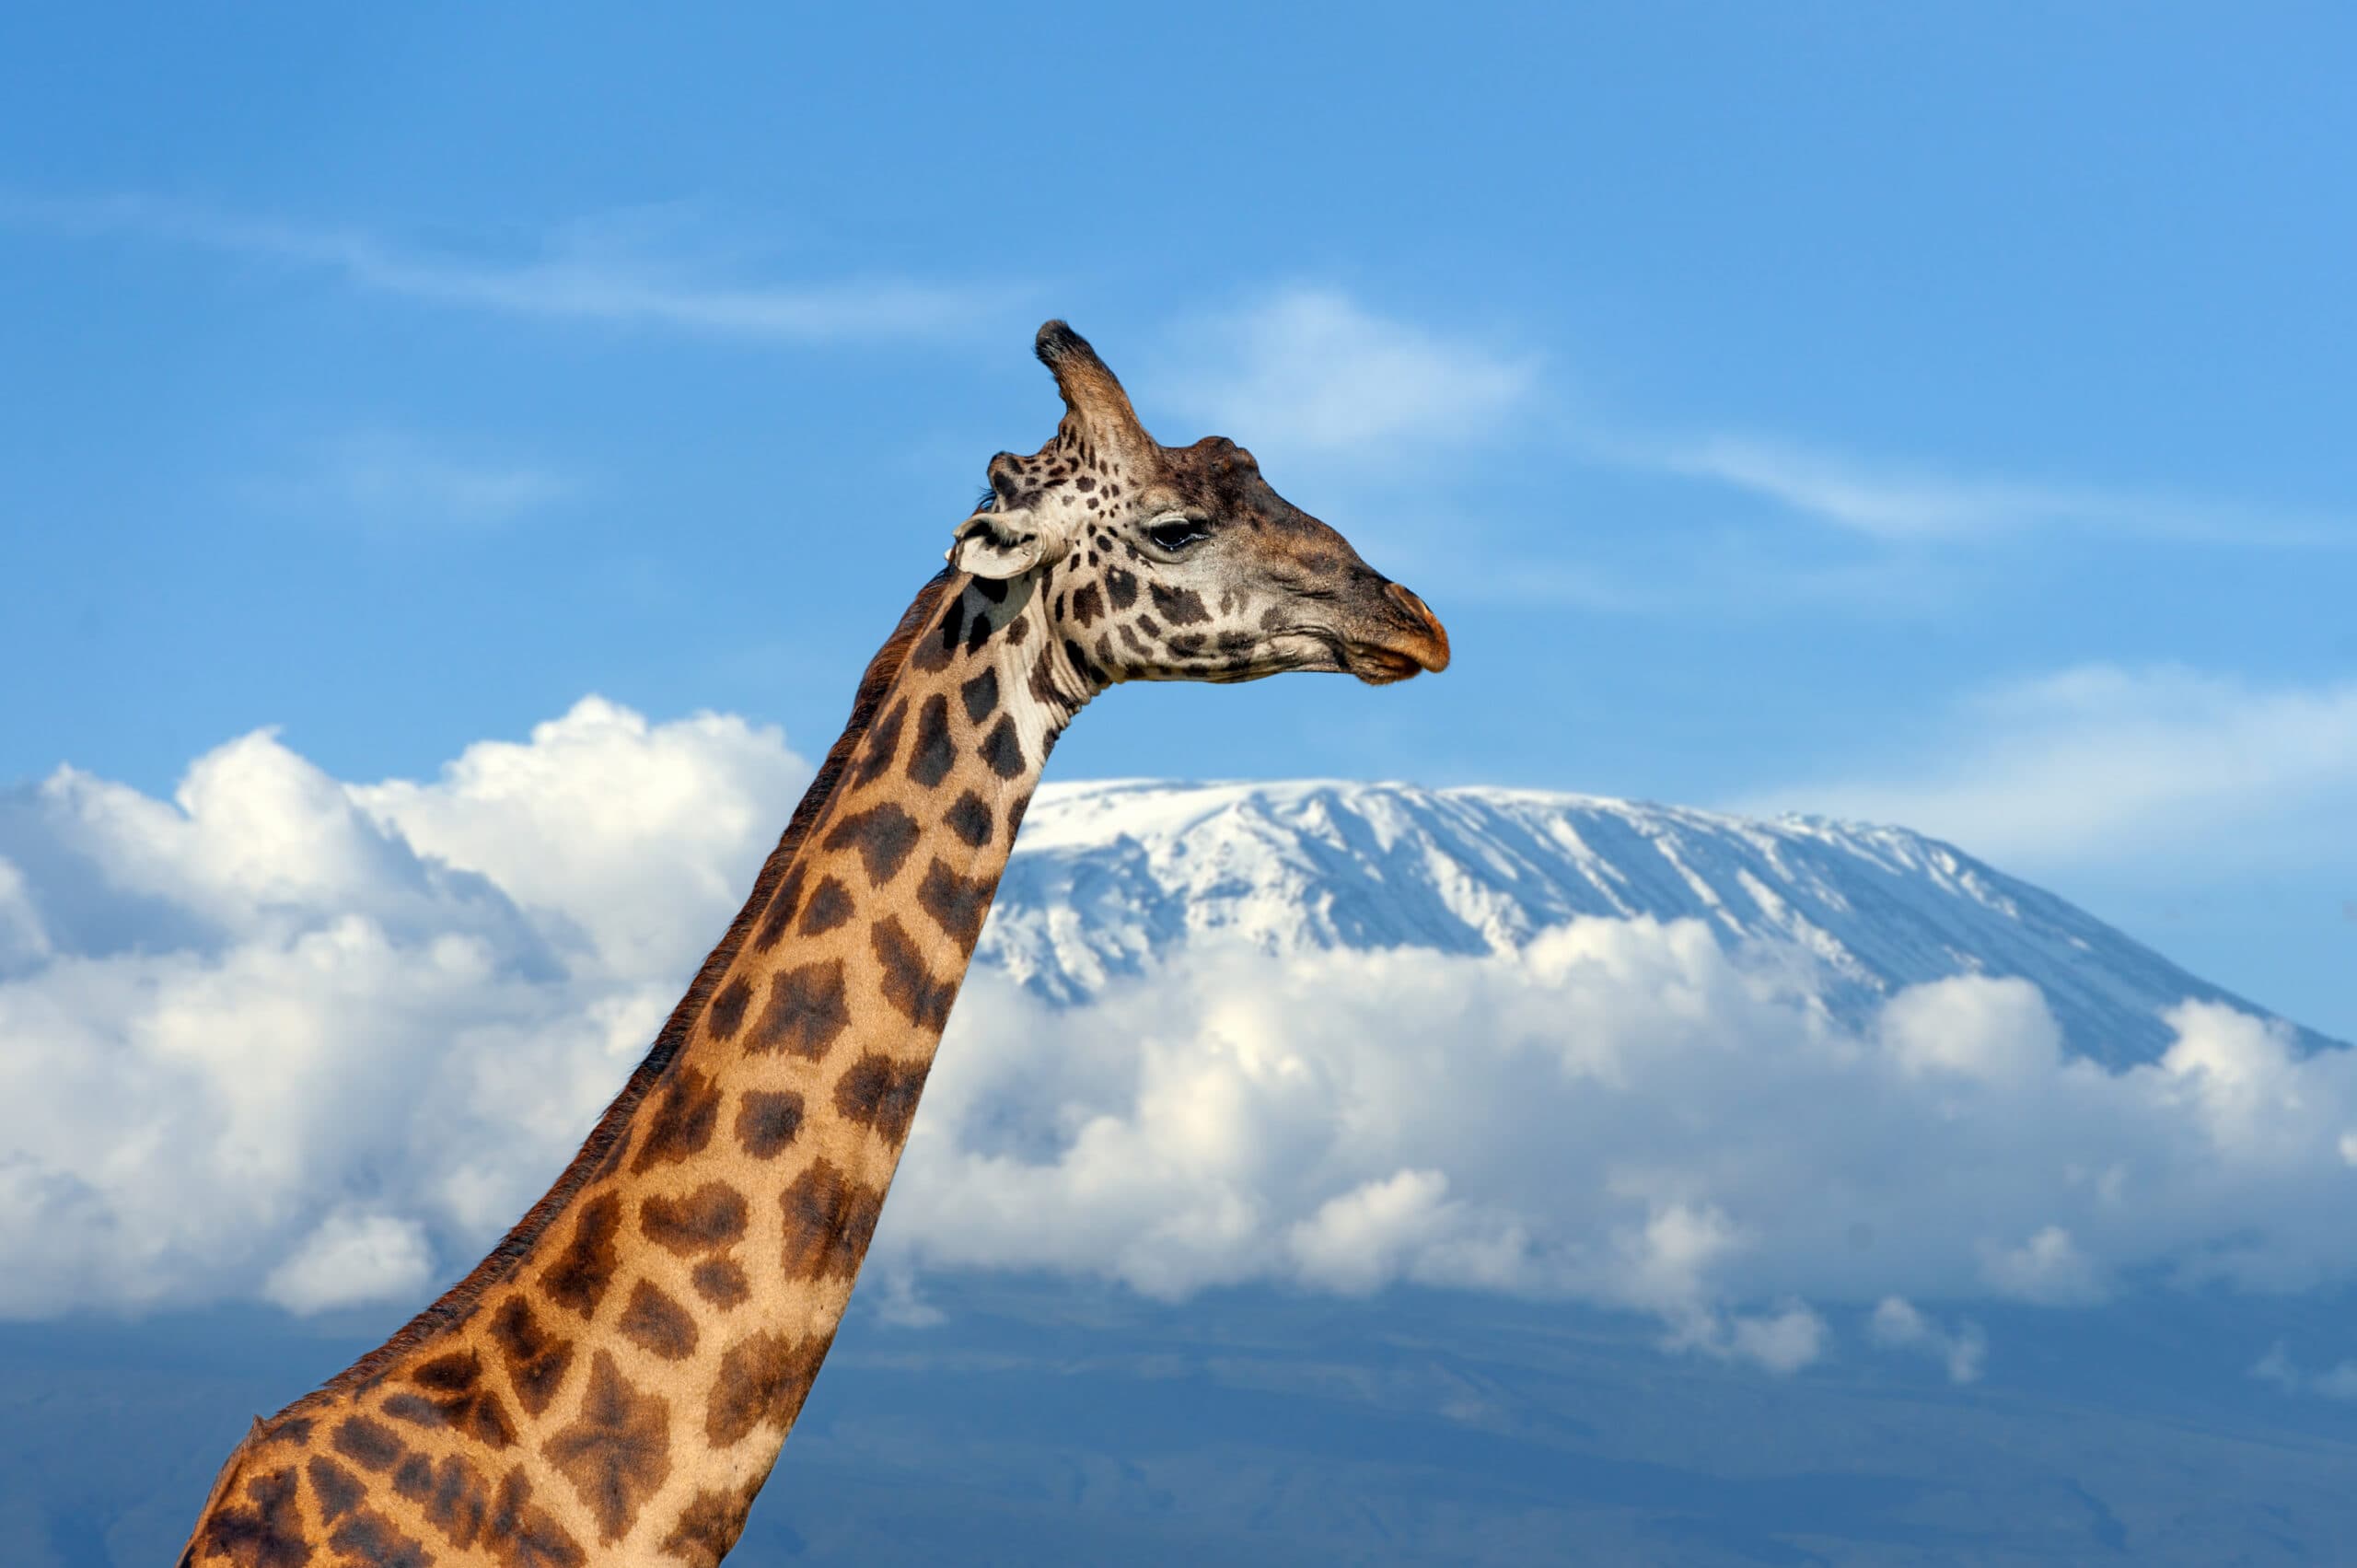 giraffe on kilimanjaro mountain in national park o 2021 08 26 15 56 07 utc scaled